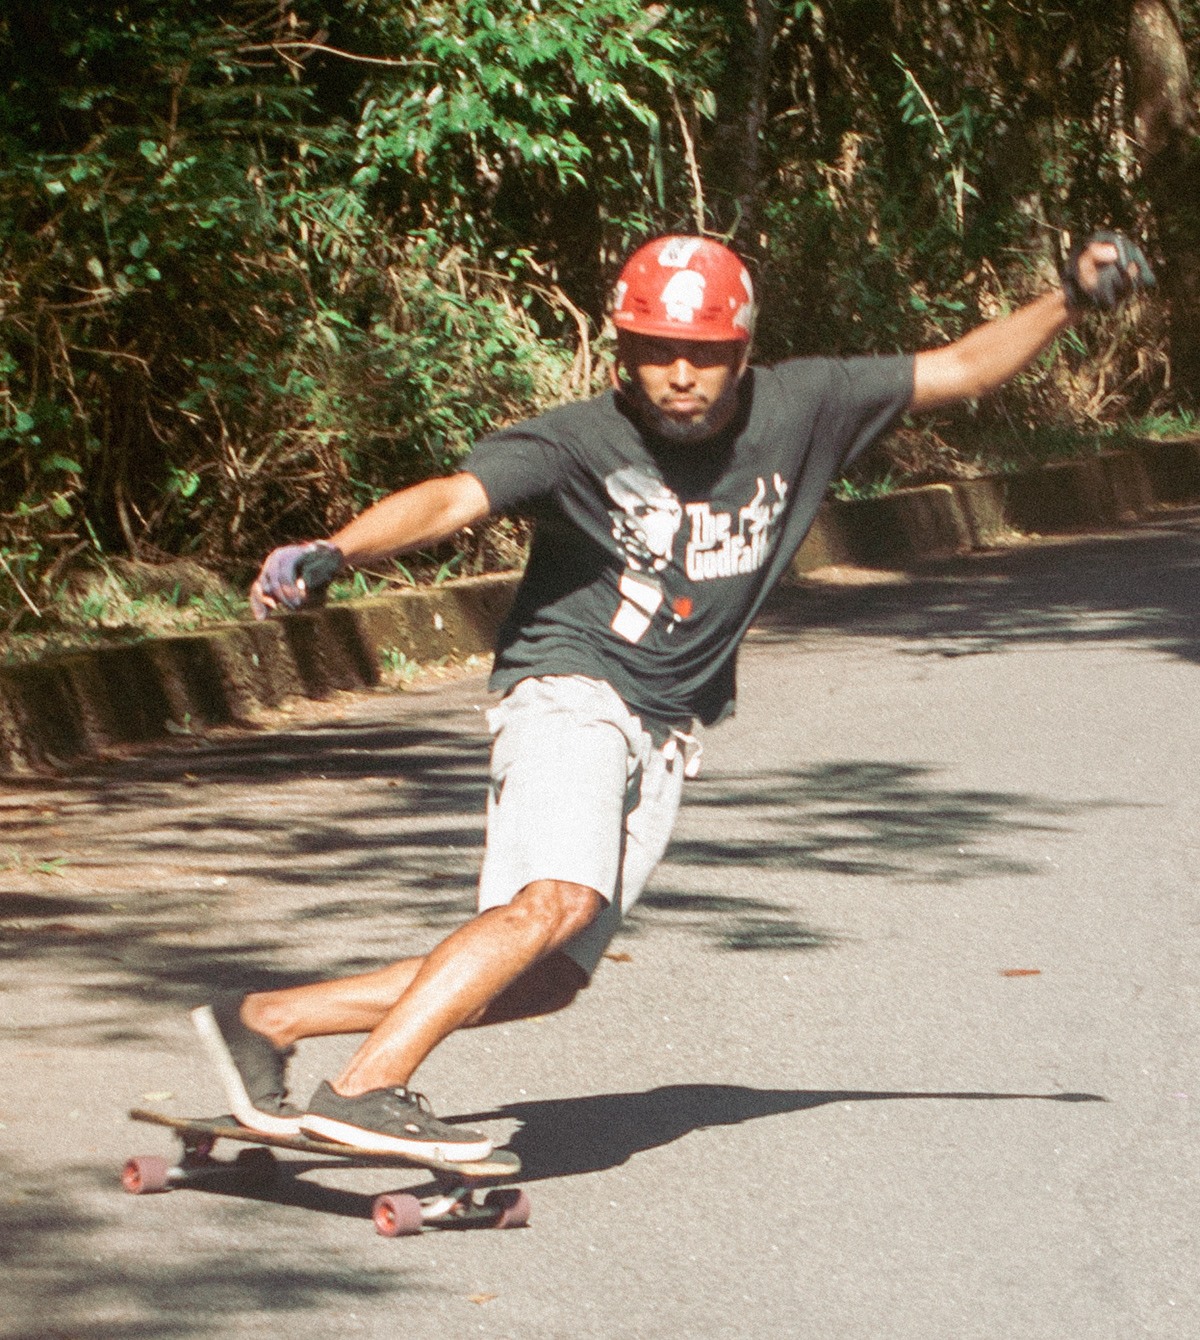 Brasil Brazil DOWNHILL LONGBOARD  Floresta da Tijuca LONGBOARD longboarding Rio de Janeiro skate skate fast skate faster skateboard skateboard photography skateboarding sumaré